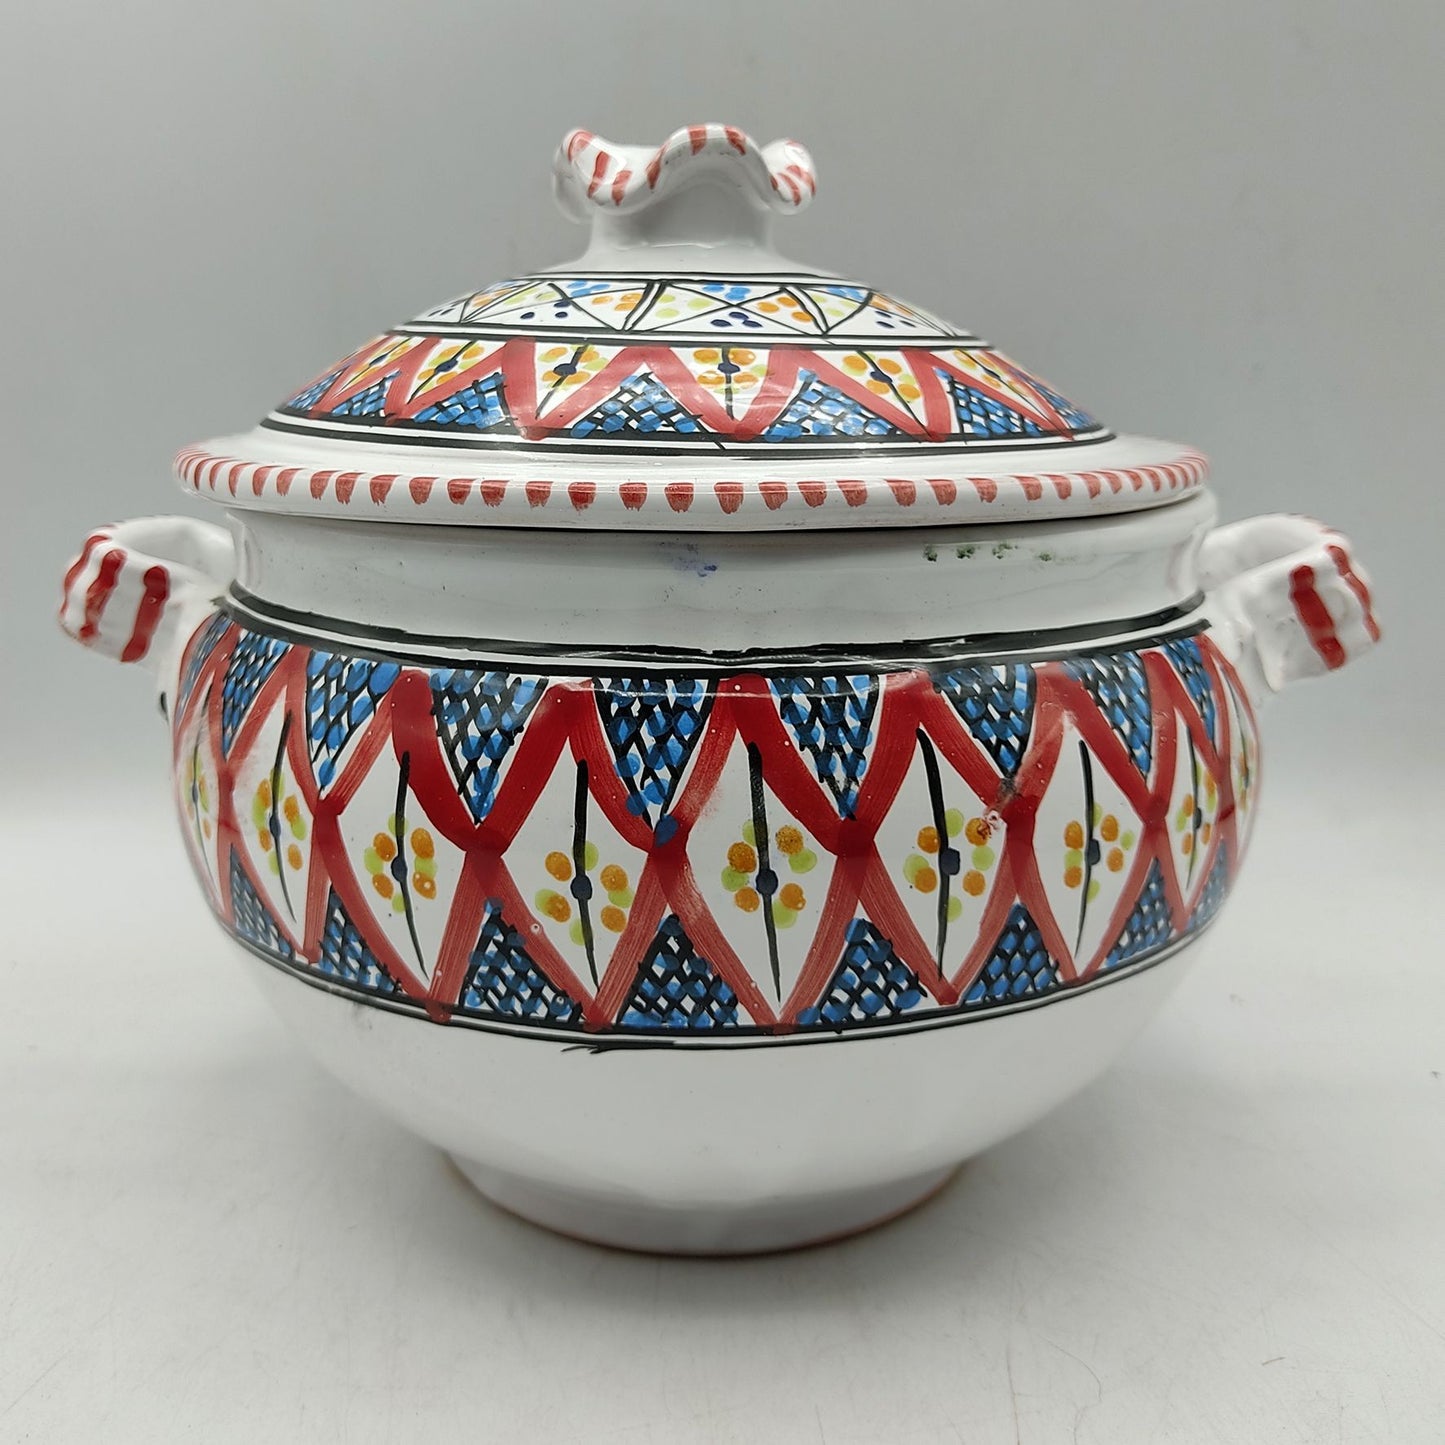 Biscottiera Zuppiera Ceramica Terracotta Etnica Tunisina